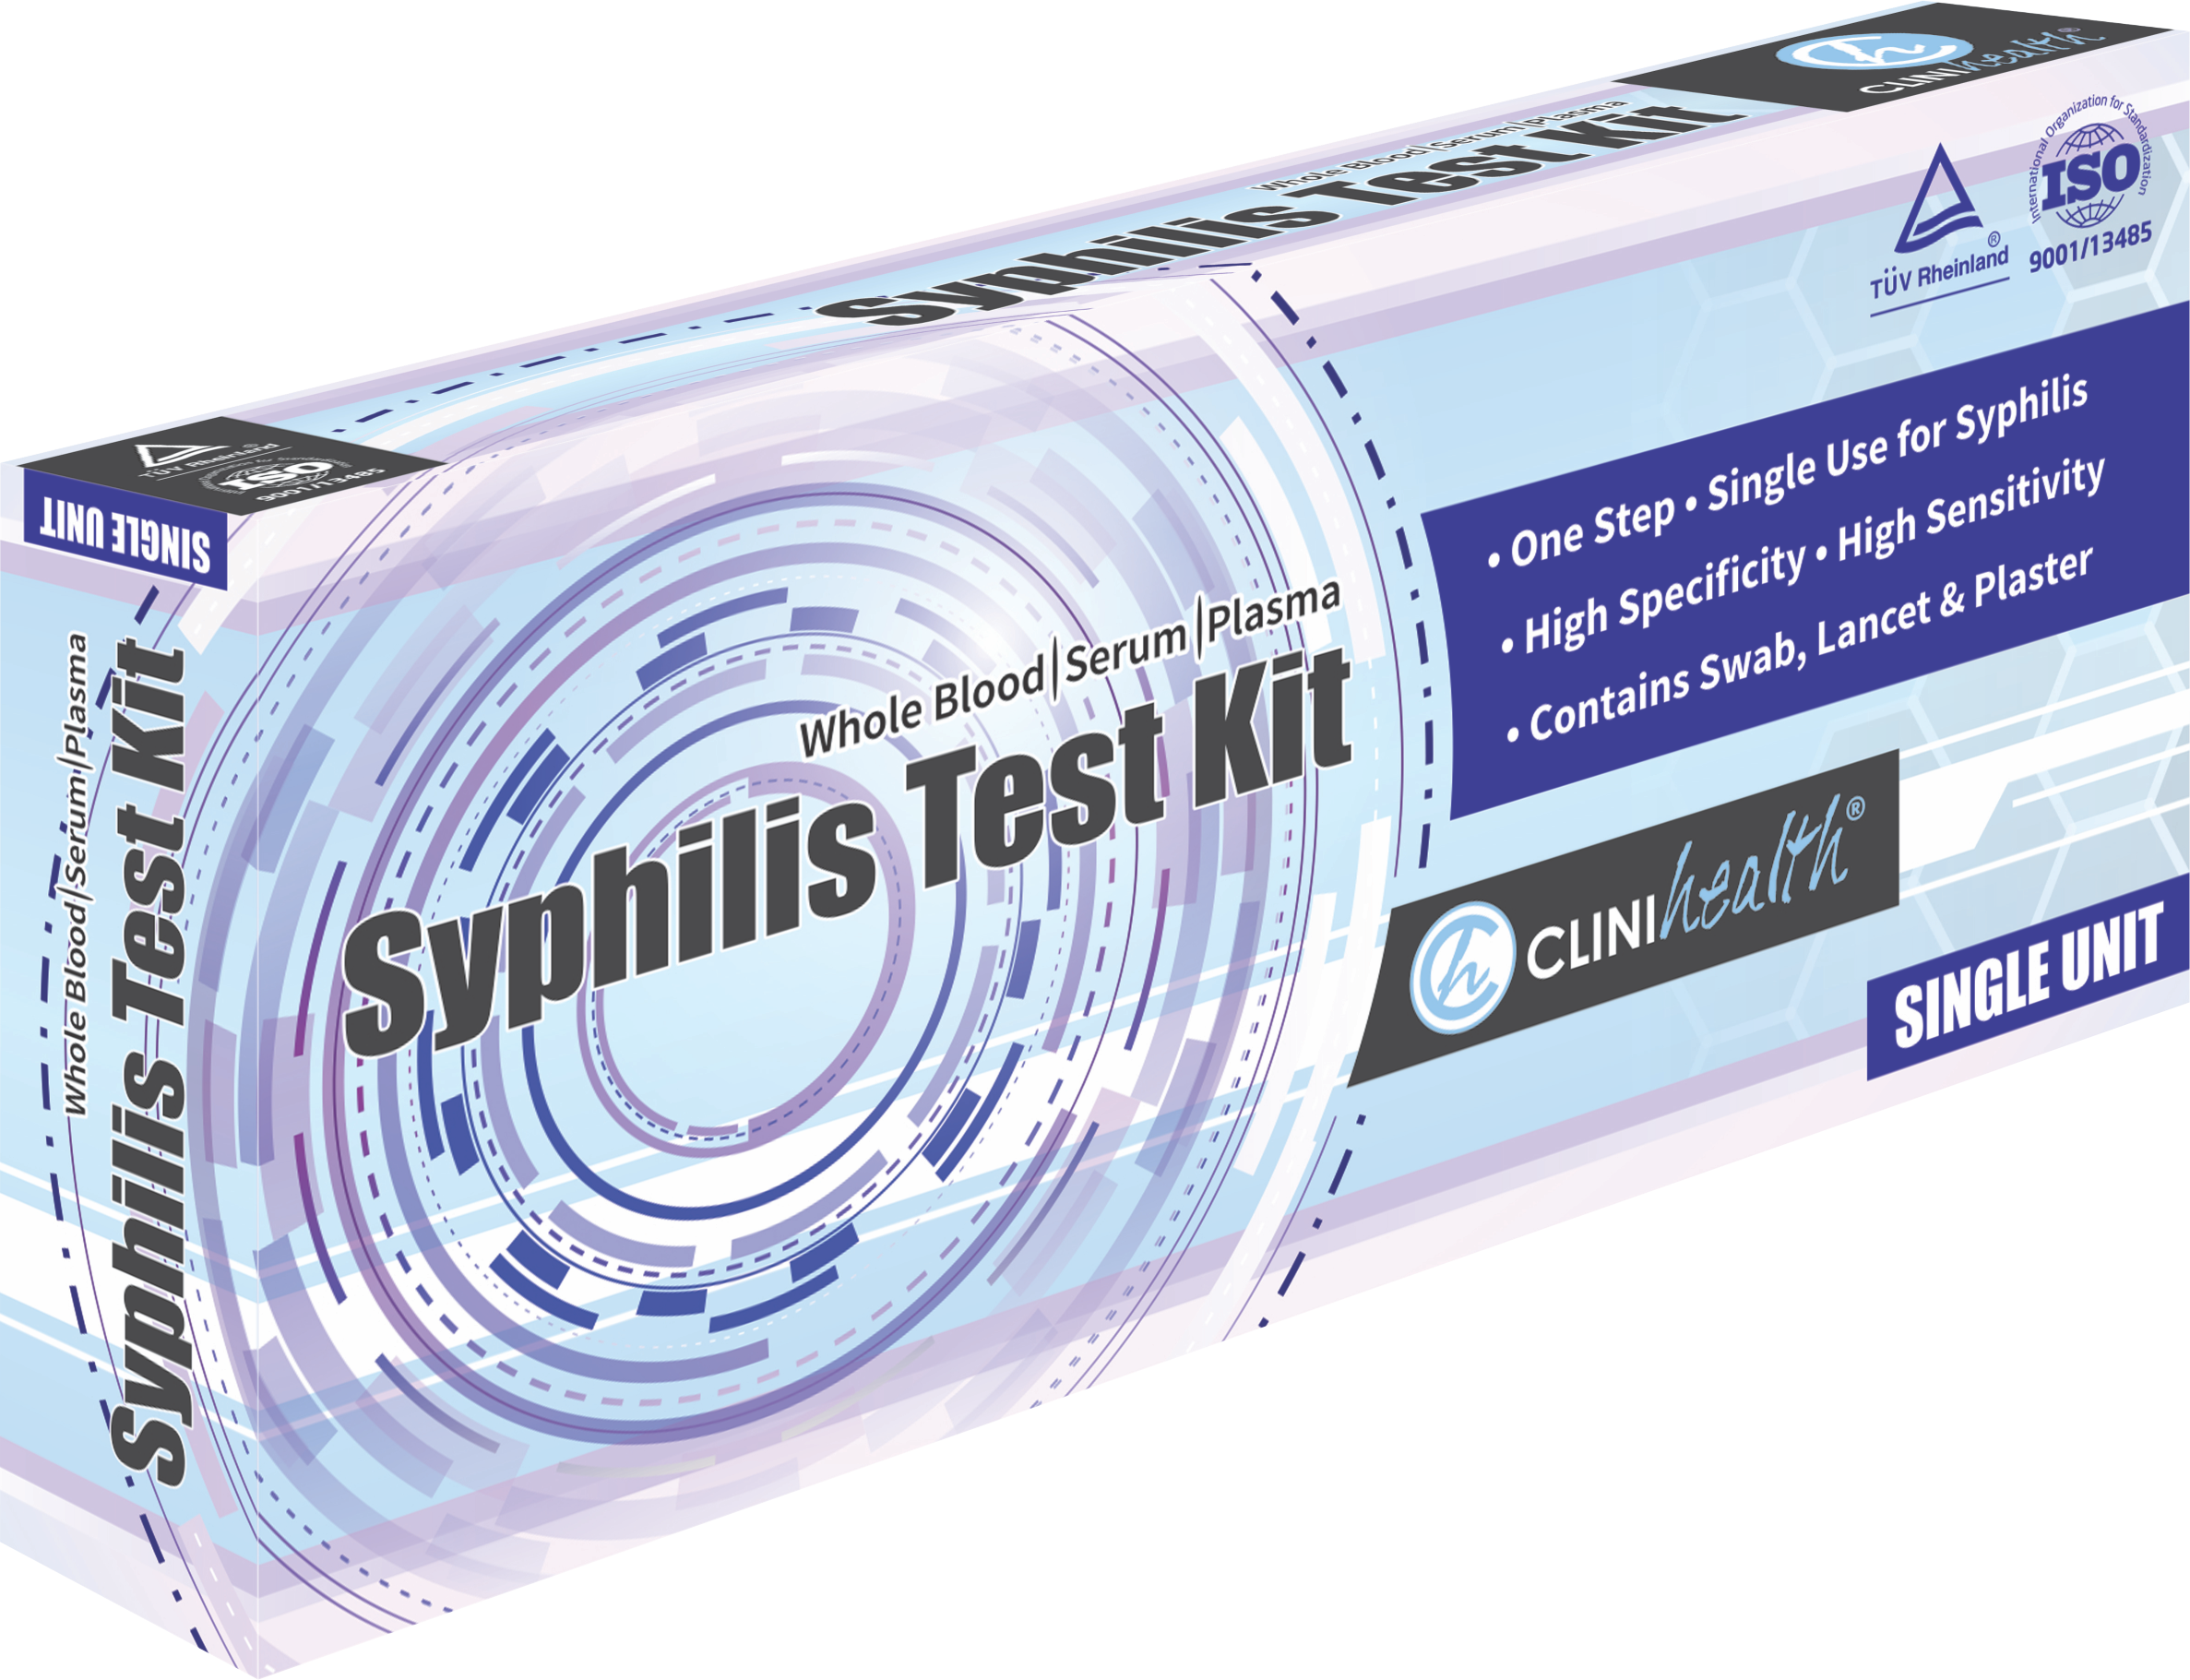 Syphilis Tests - Clinihealth2374 x 1821